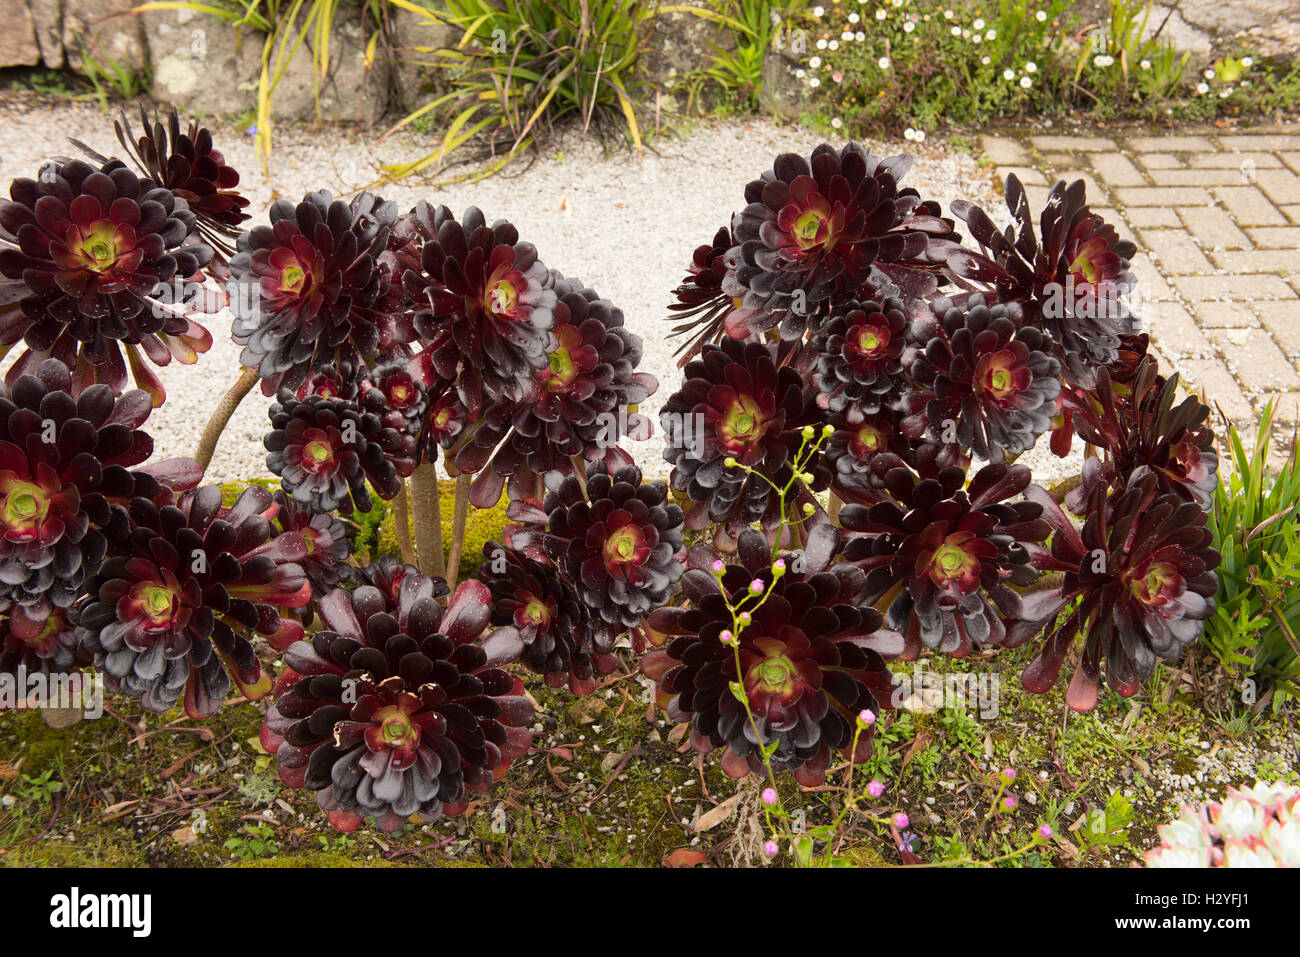 Aeonium Arboreum Atropurpureum Or Dark Purple Houseleek Growing In Stock Photo Alamy